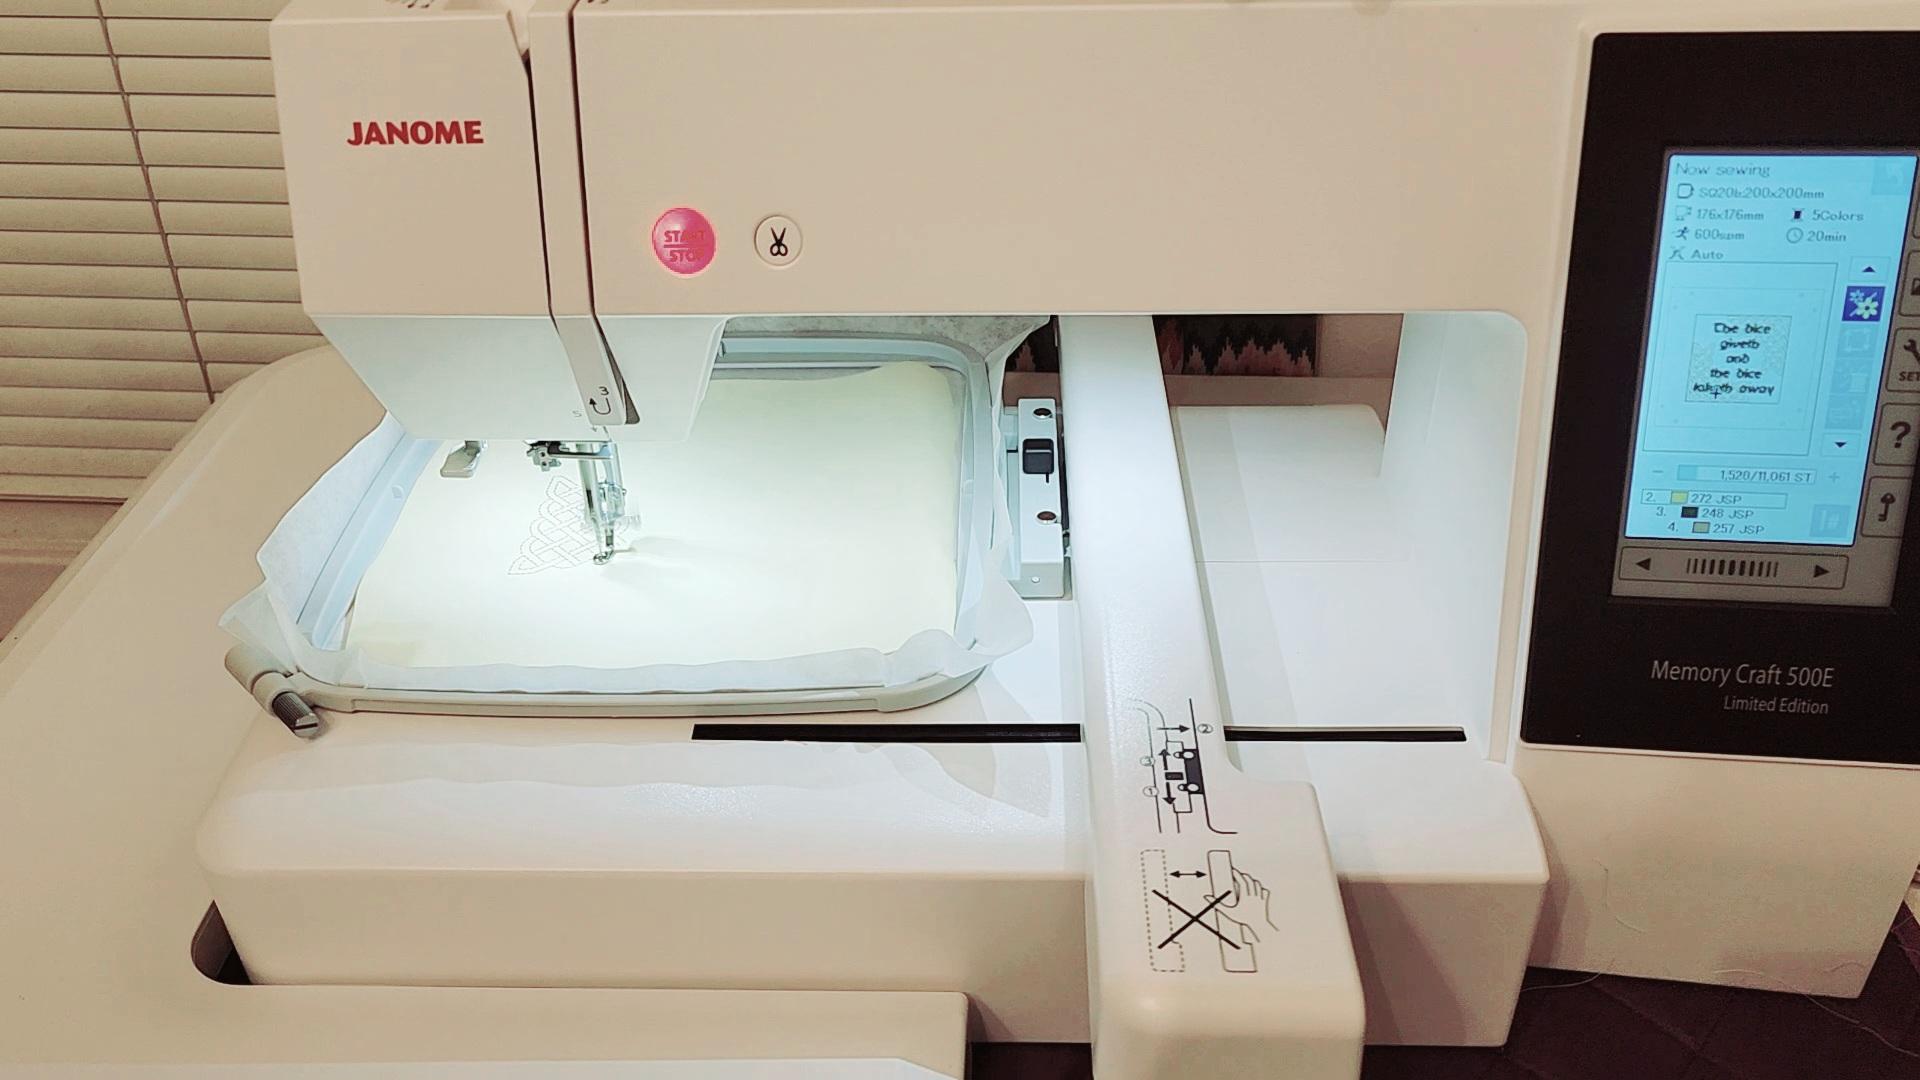 Janome Memory Craft 500E Embroidery Machine - Refurbished